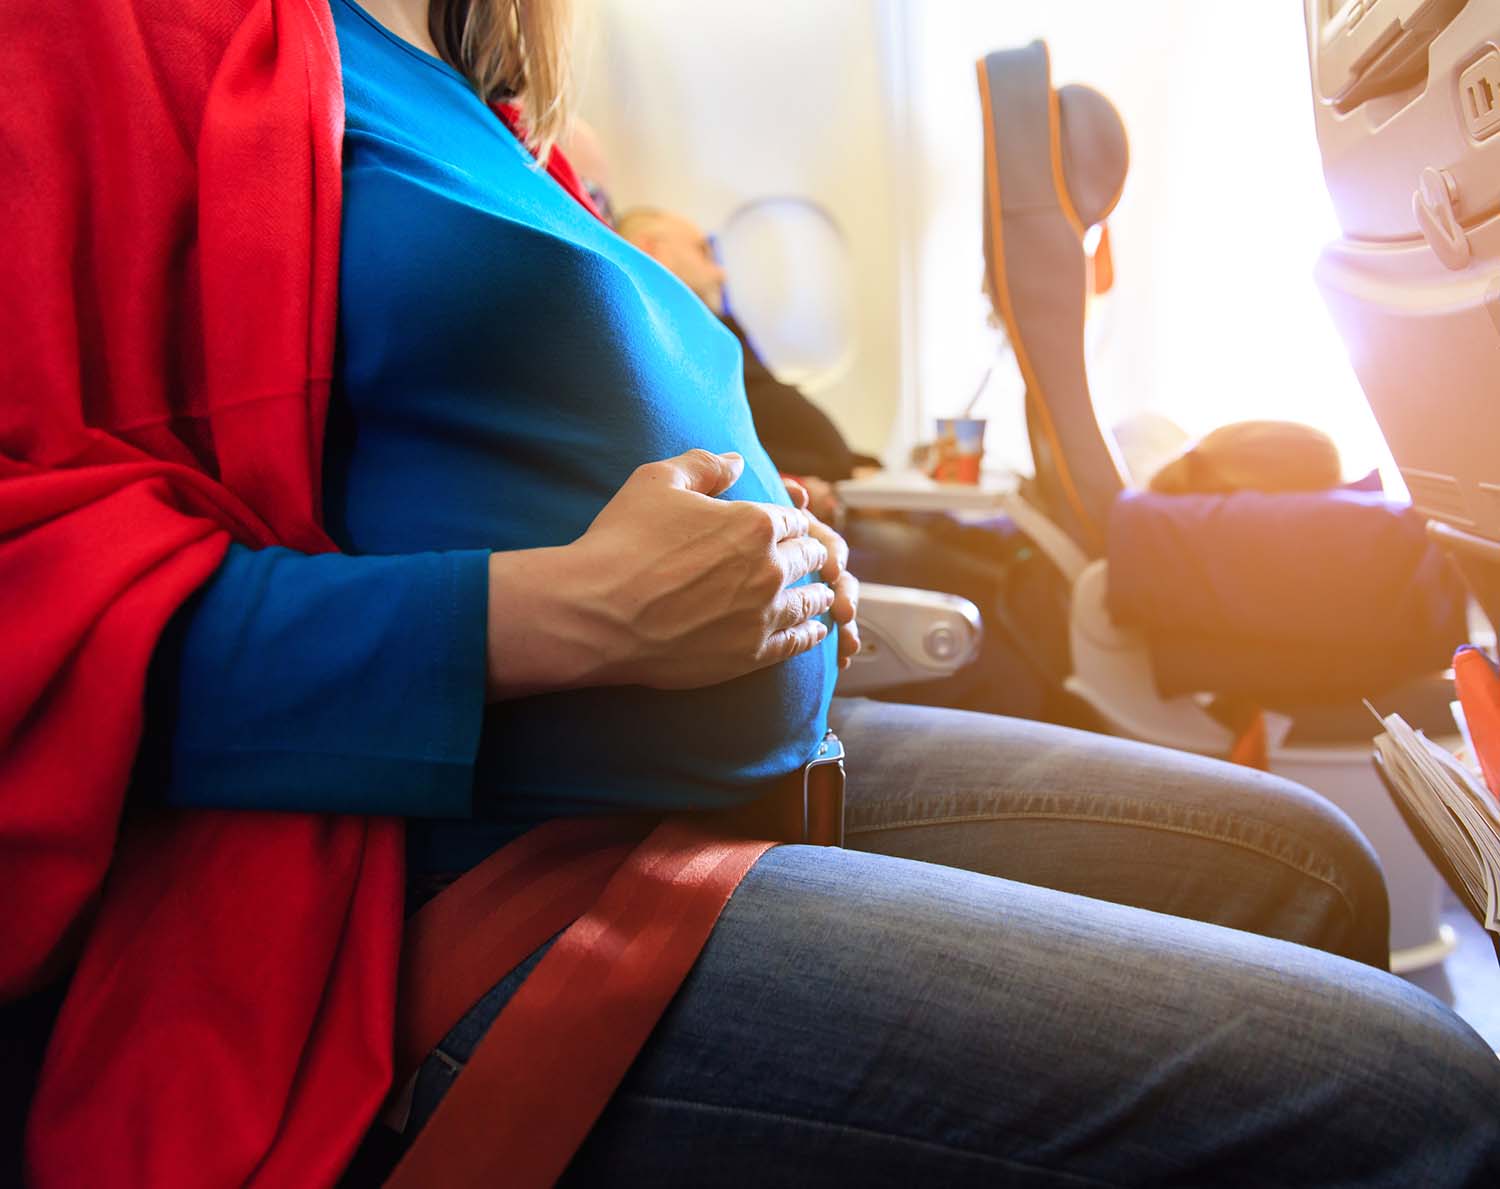 southdowns travel insurance pregnancy